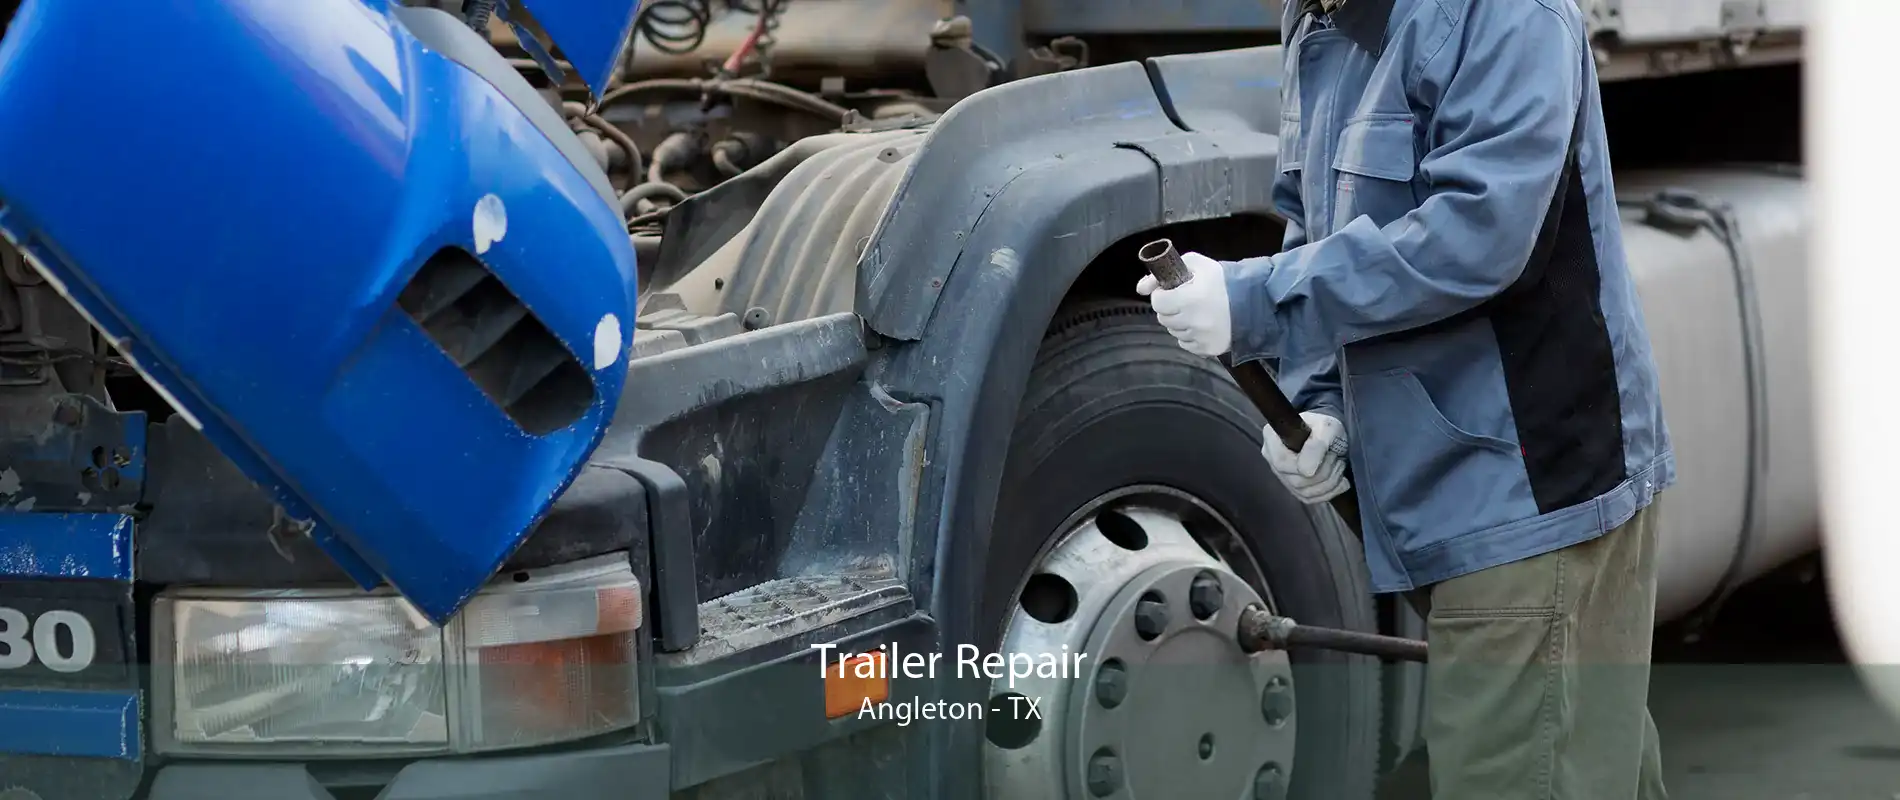 Trailer Repair Angleton - TX